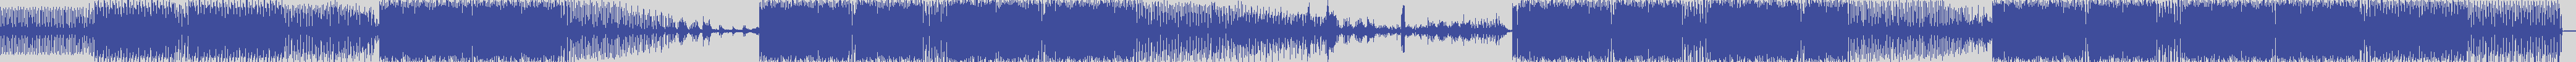 atomic_recordings [AR013] Bass Funk - Play [Original Mix] audio wave form